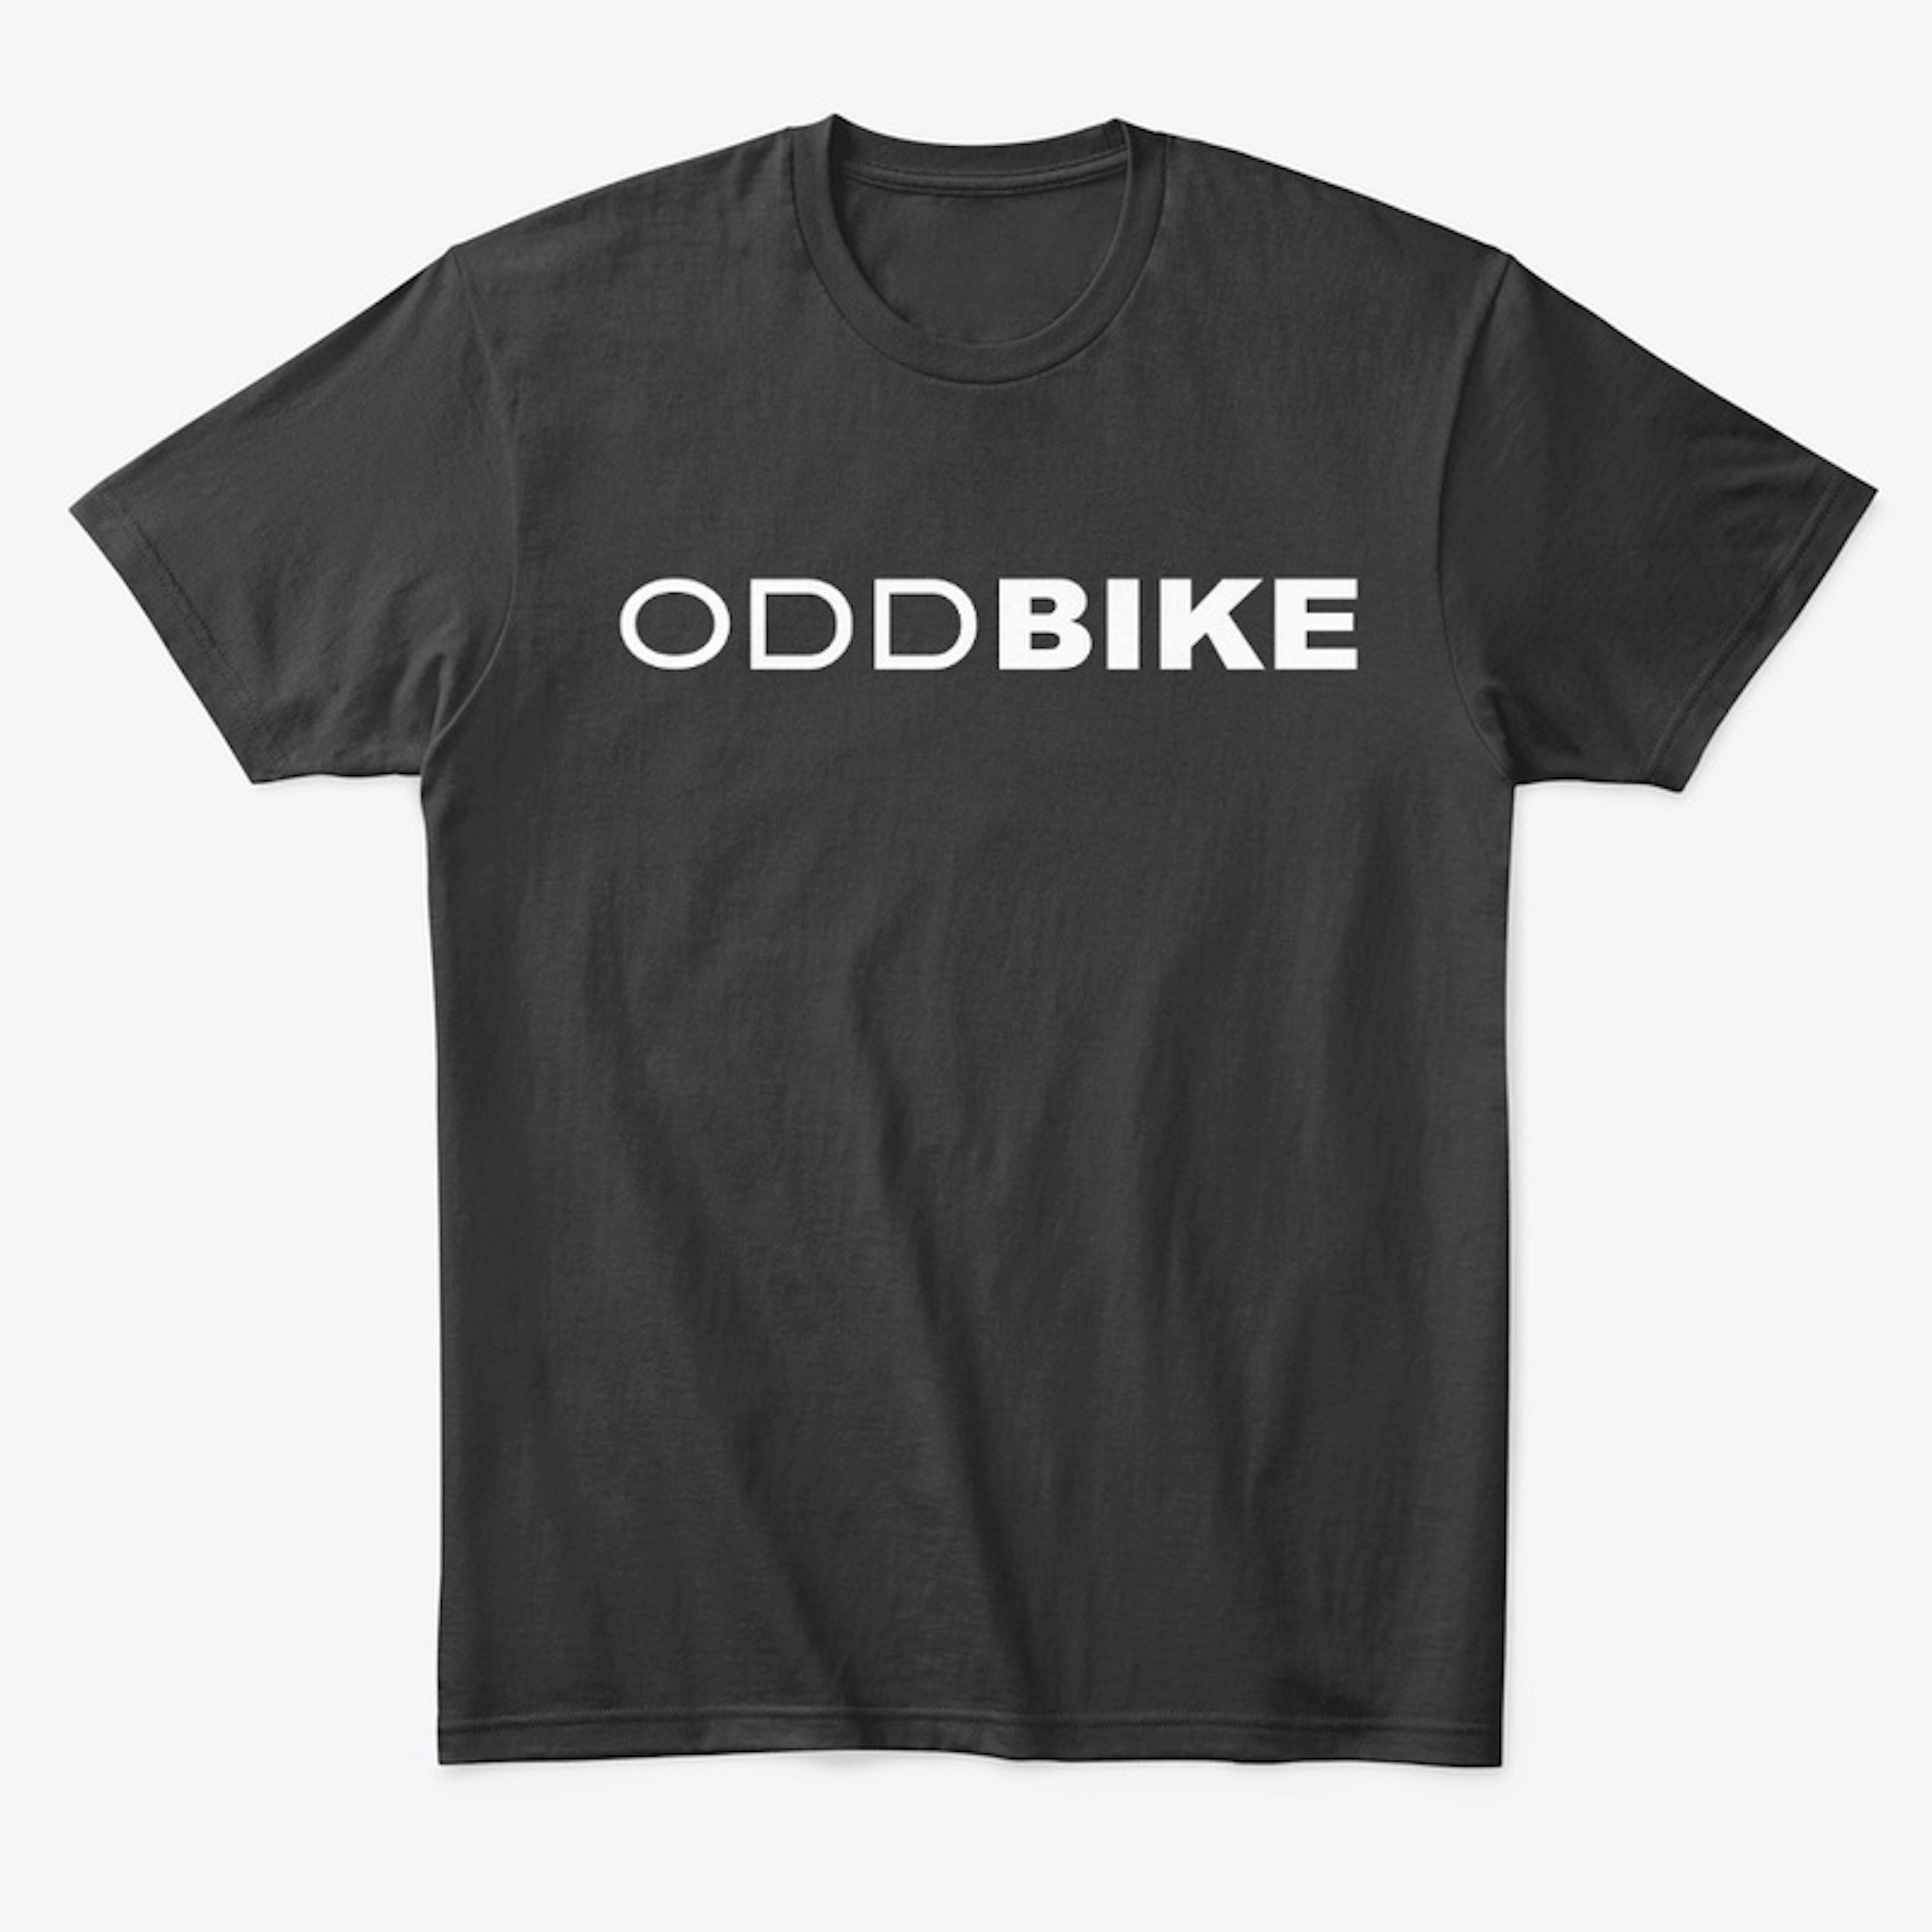 OddBike Classic Men's T-Shirt